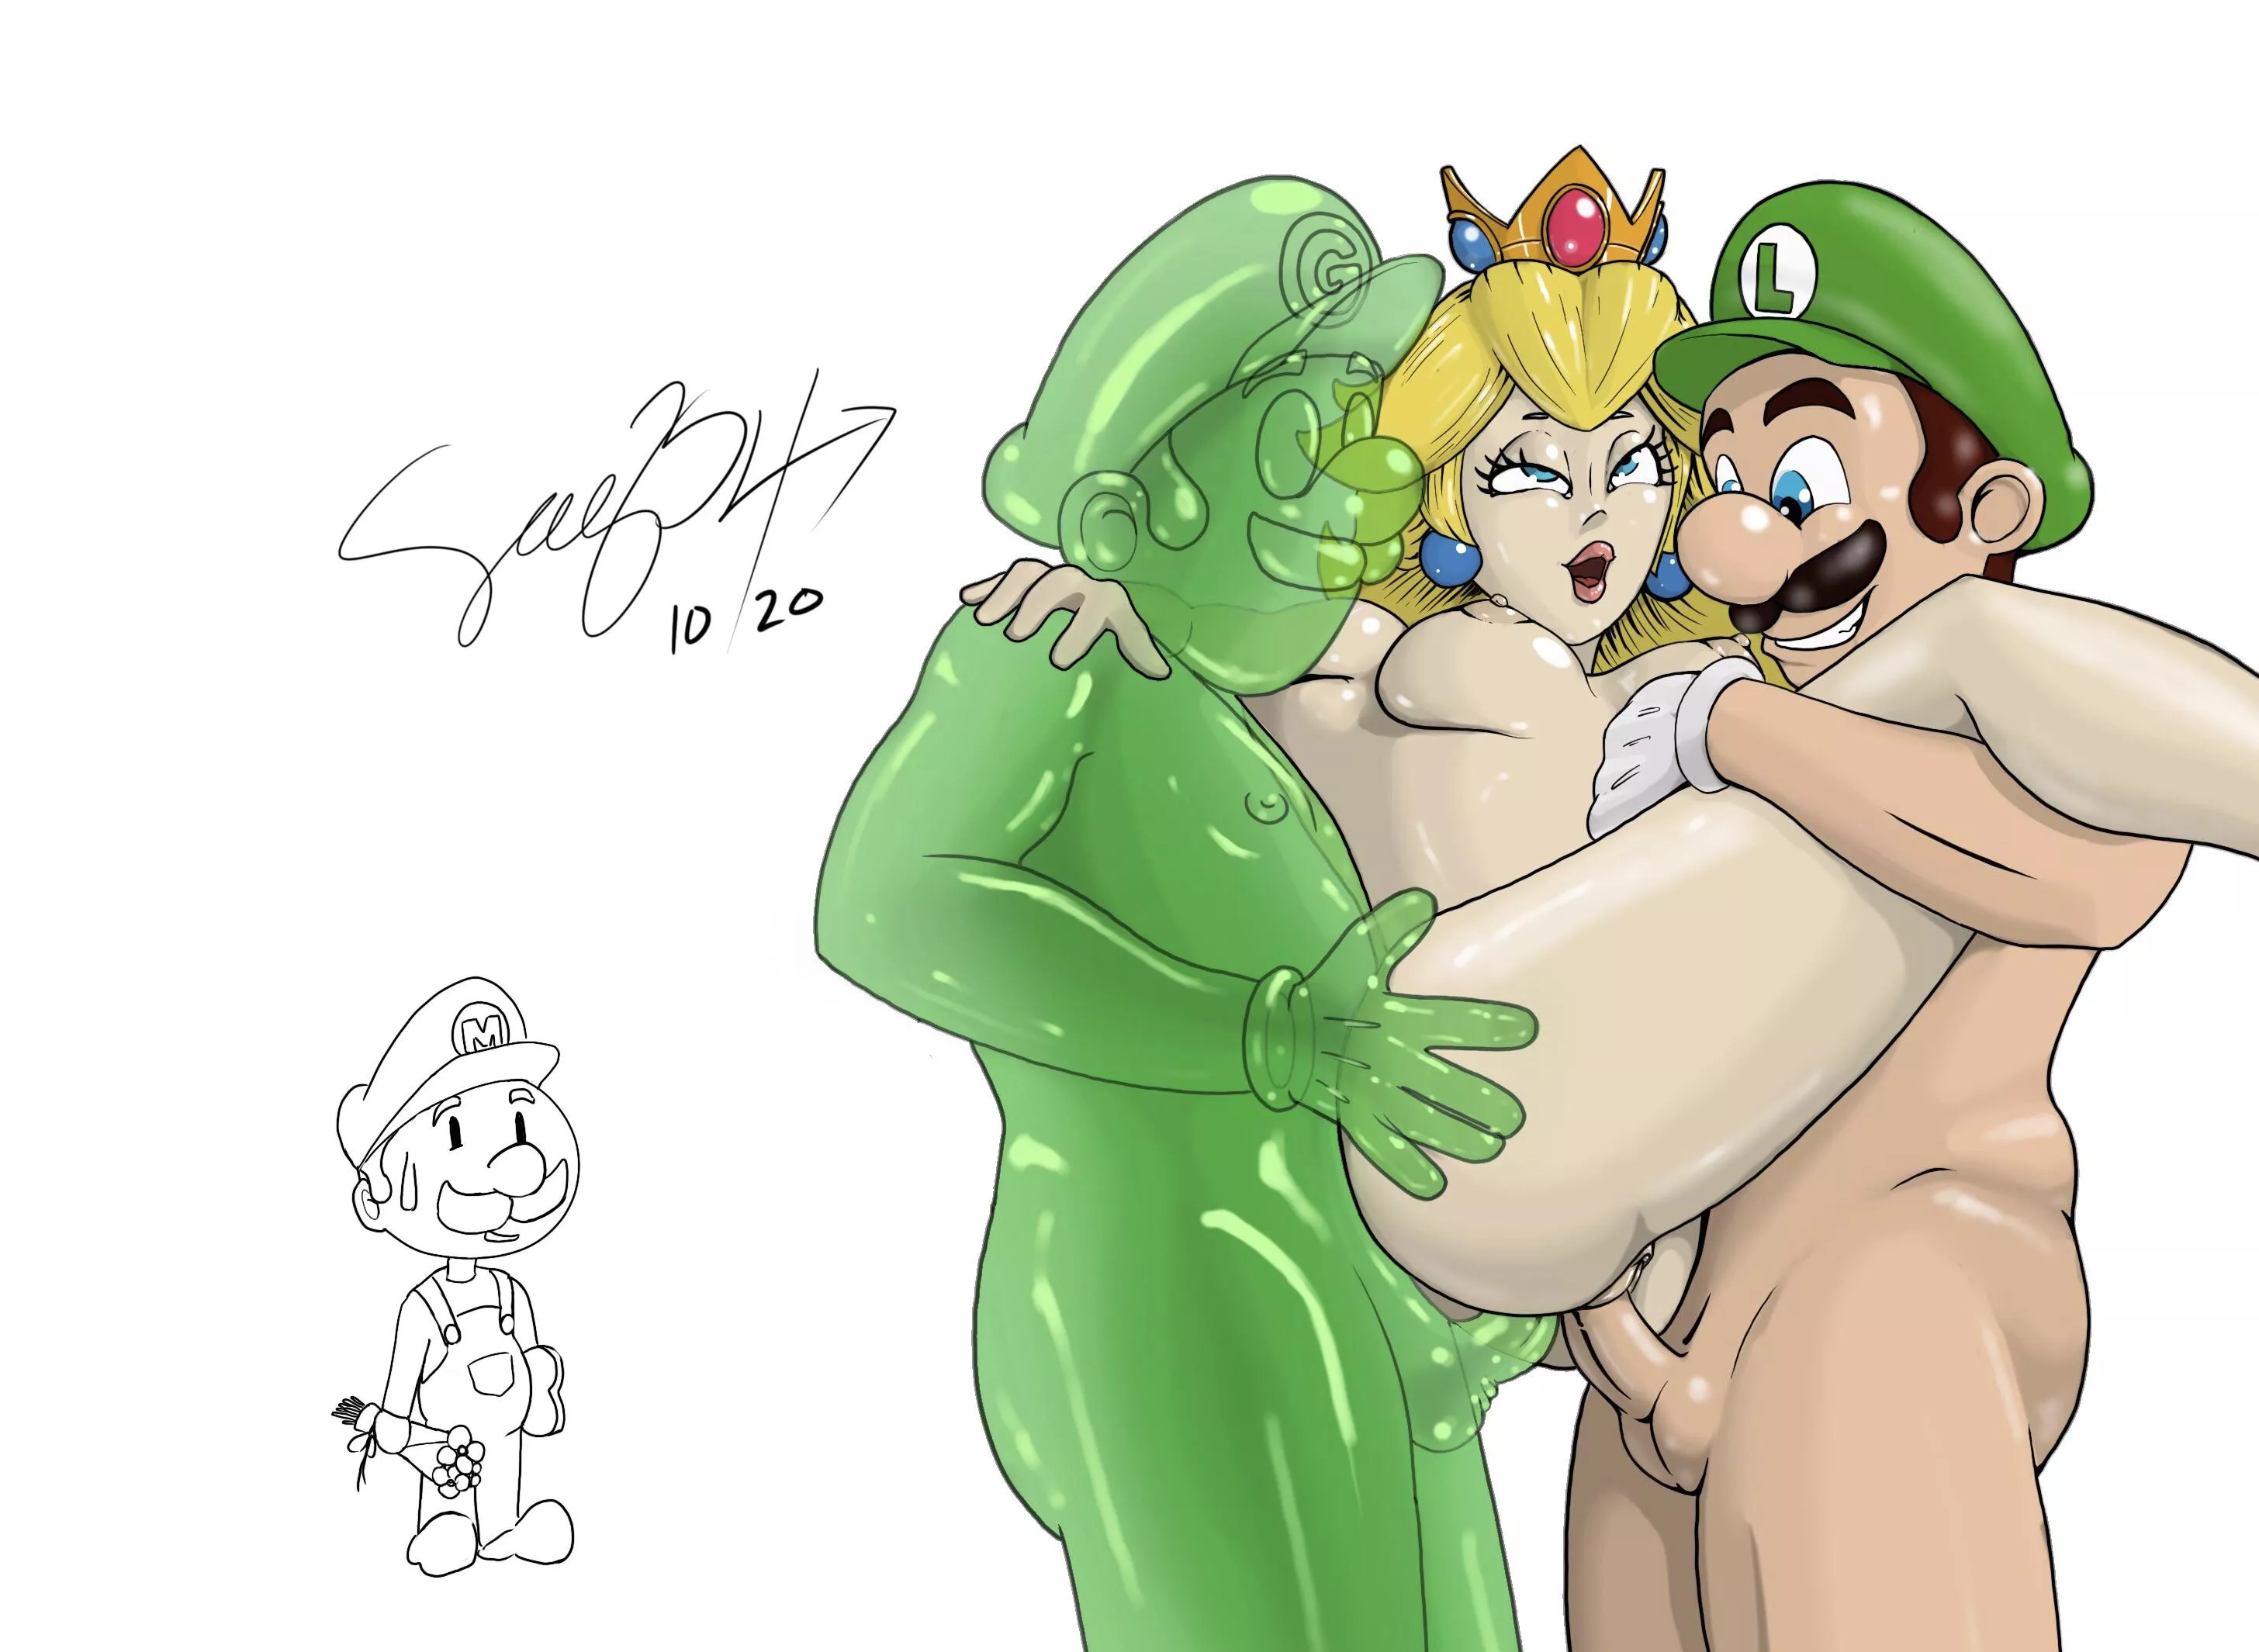 Luigi x bowser porn